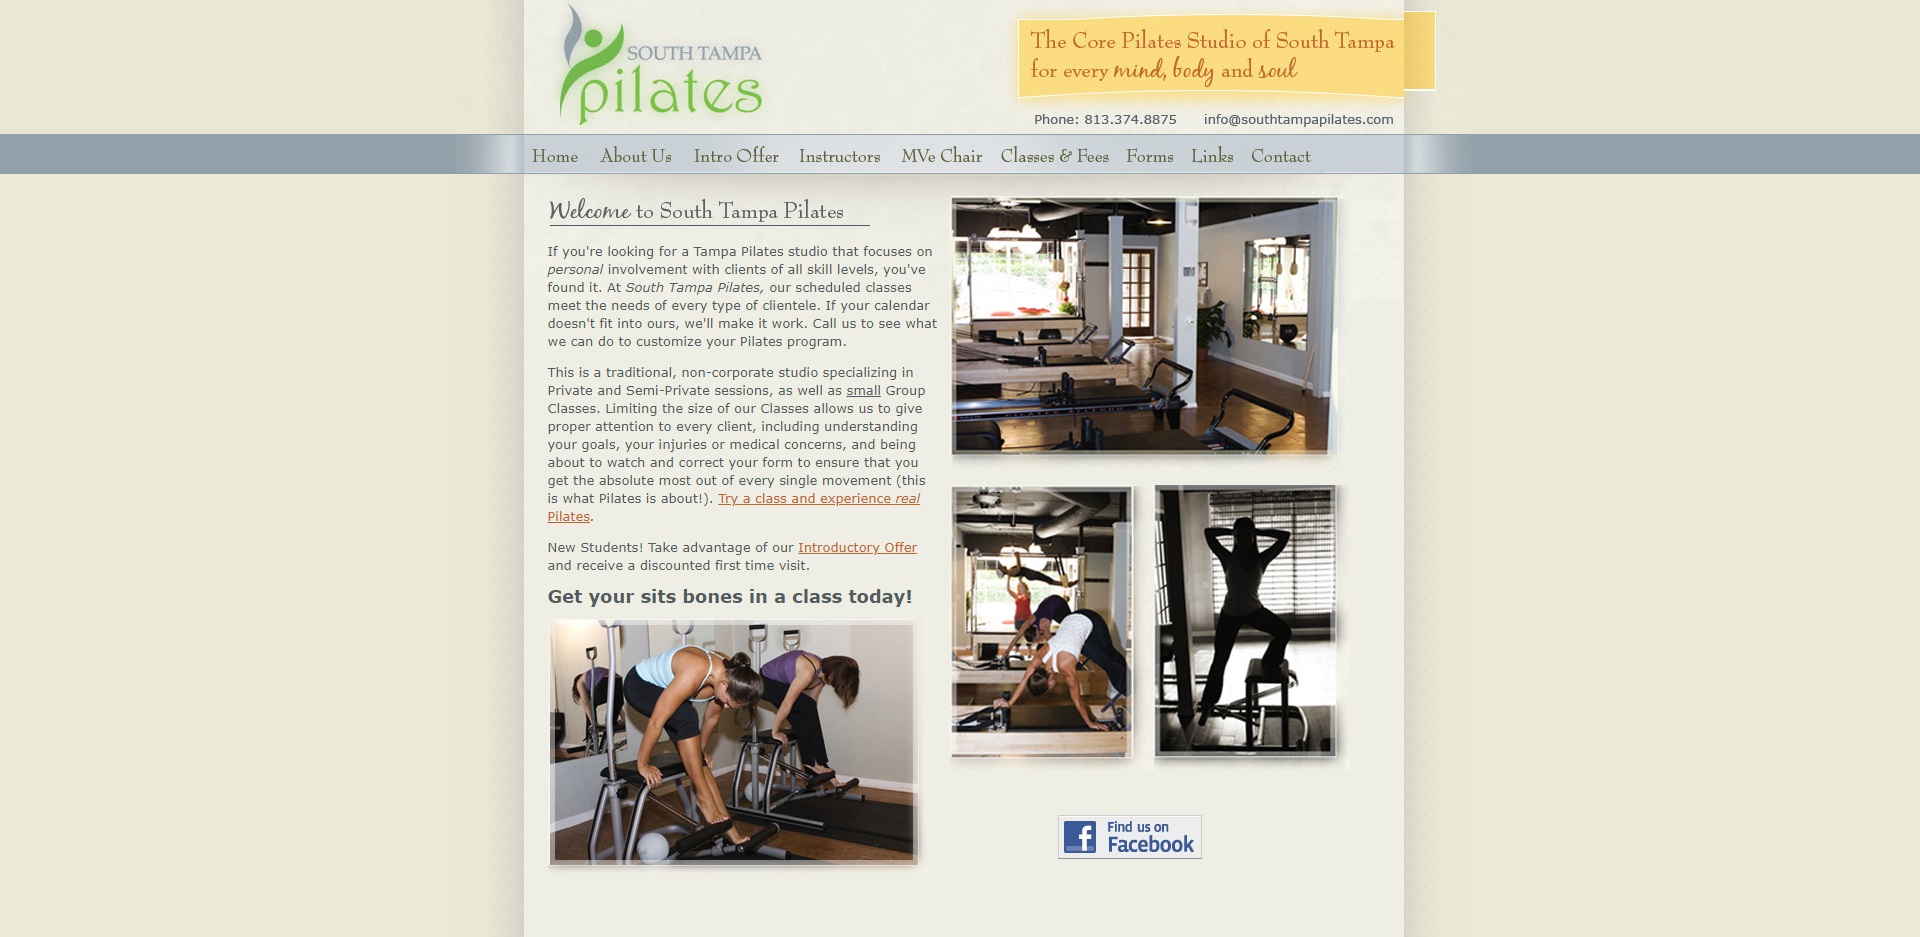 The Best Pilates Studios in Tampa, FL